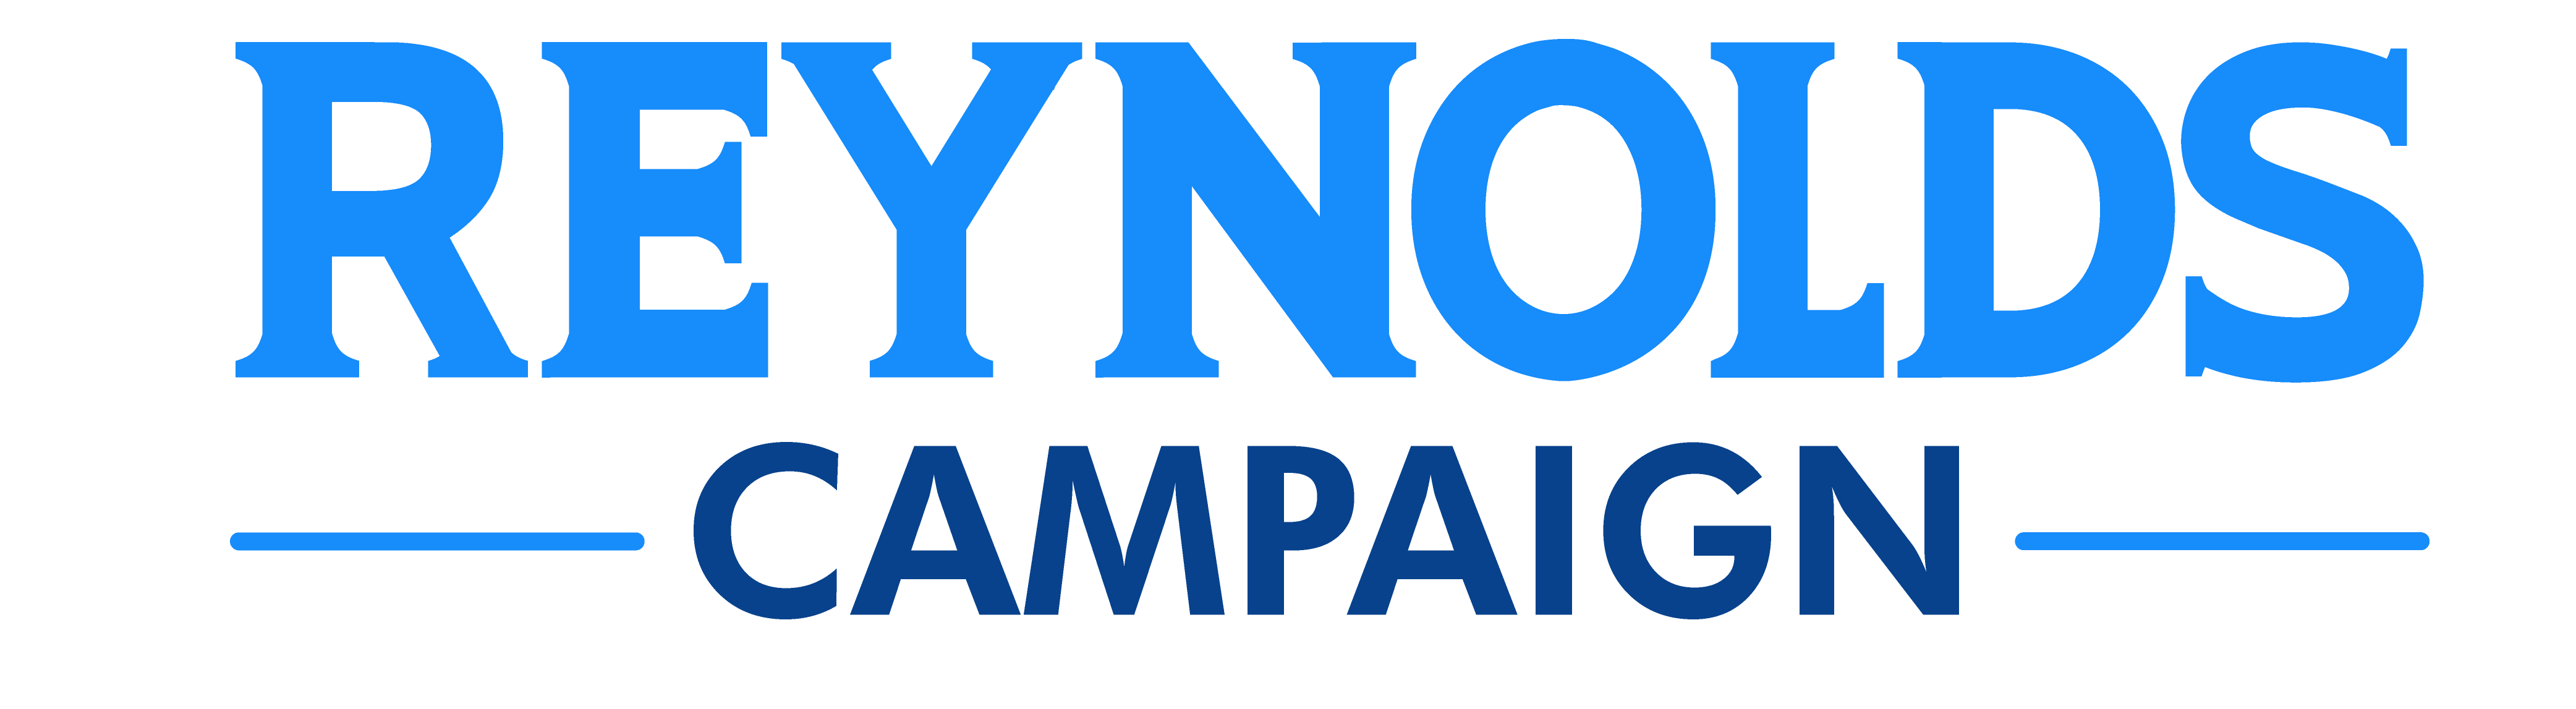 Reynolds Campaign